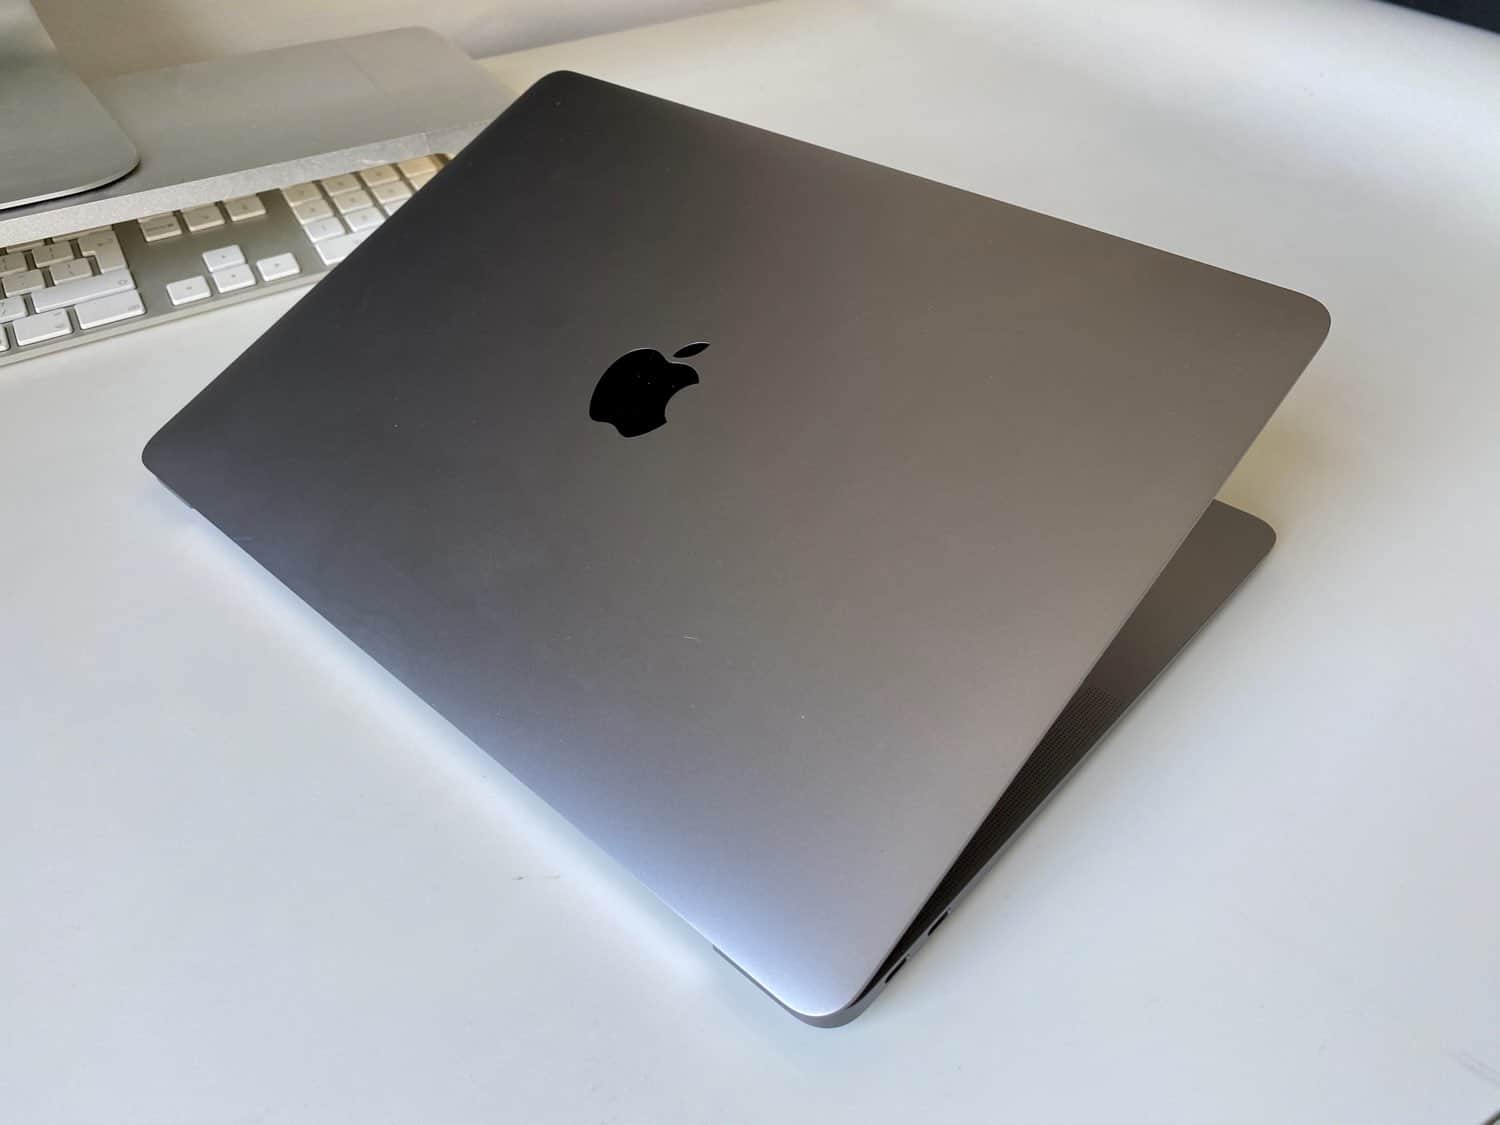 MacBook Air 2020 review: bijna dichtgeklapt